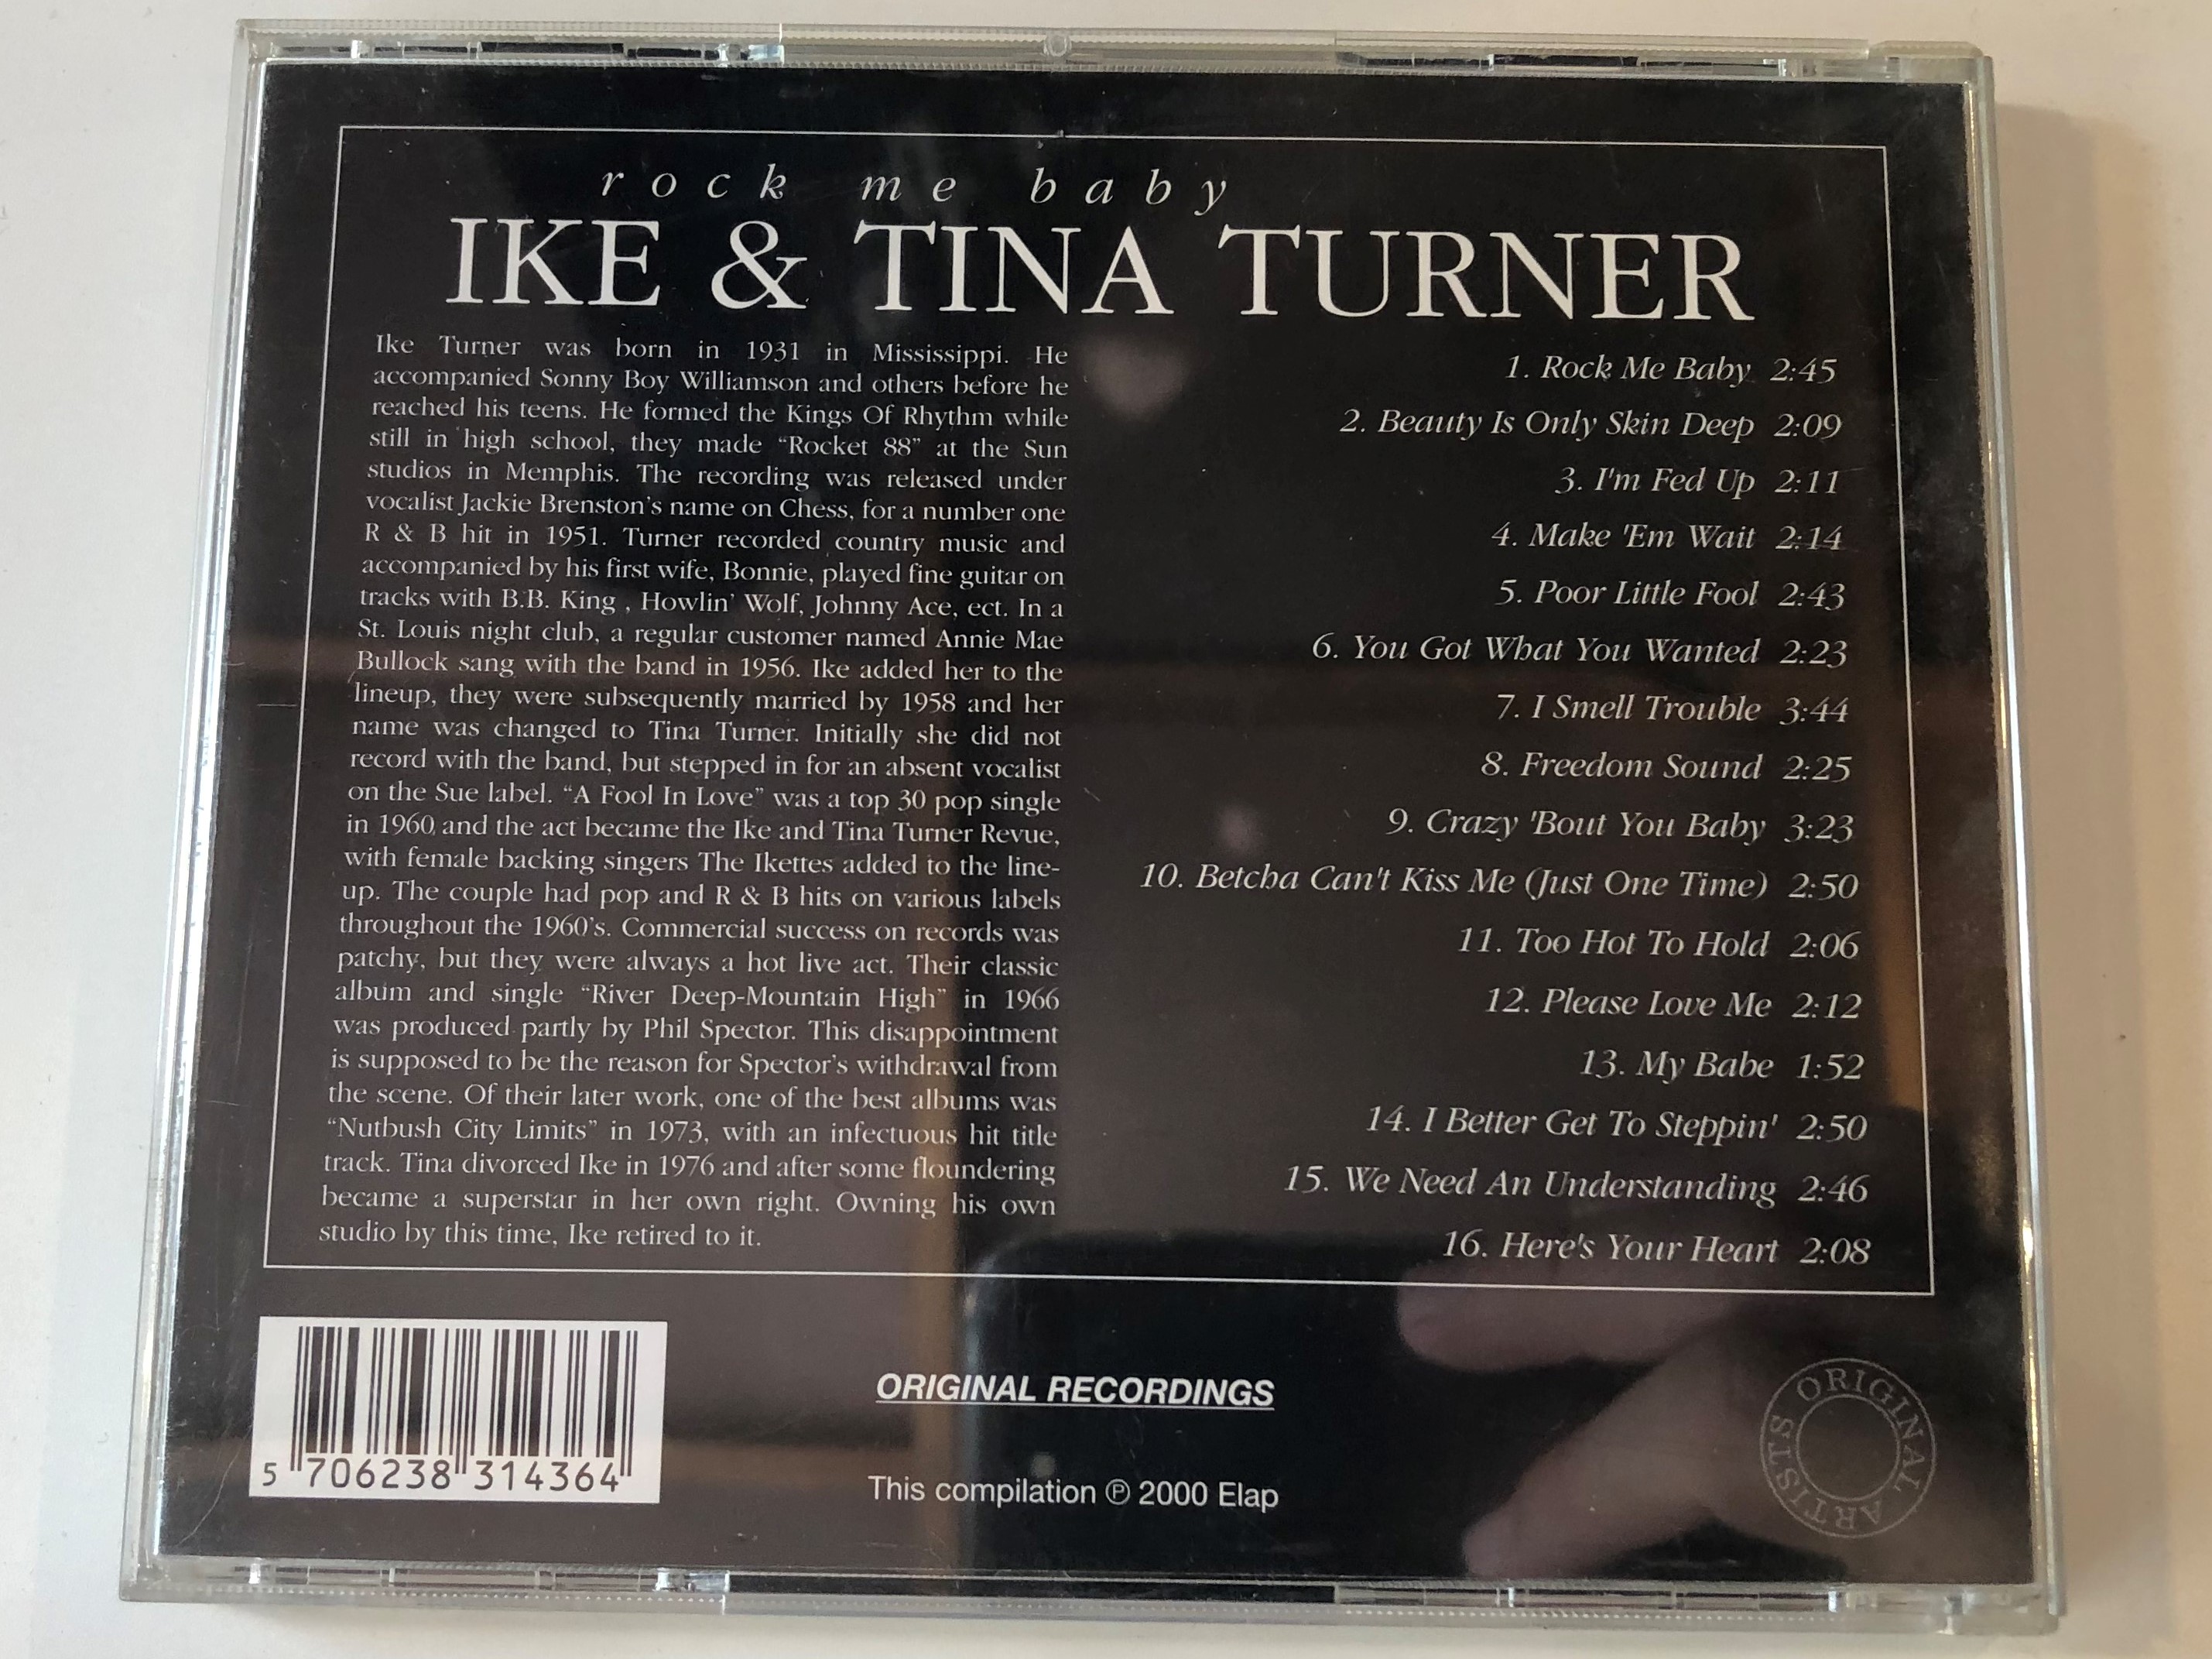 rock-me-baby-ike-tina-turner-elap-music-audio-cd-2000-5706238314364-2-.jpg